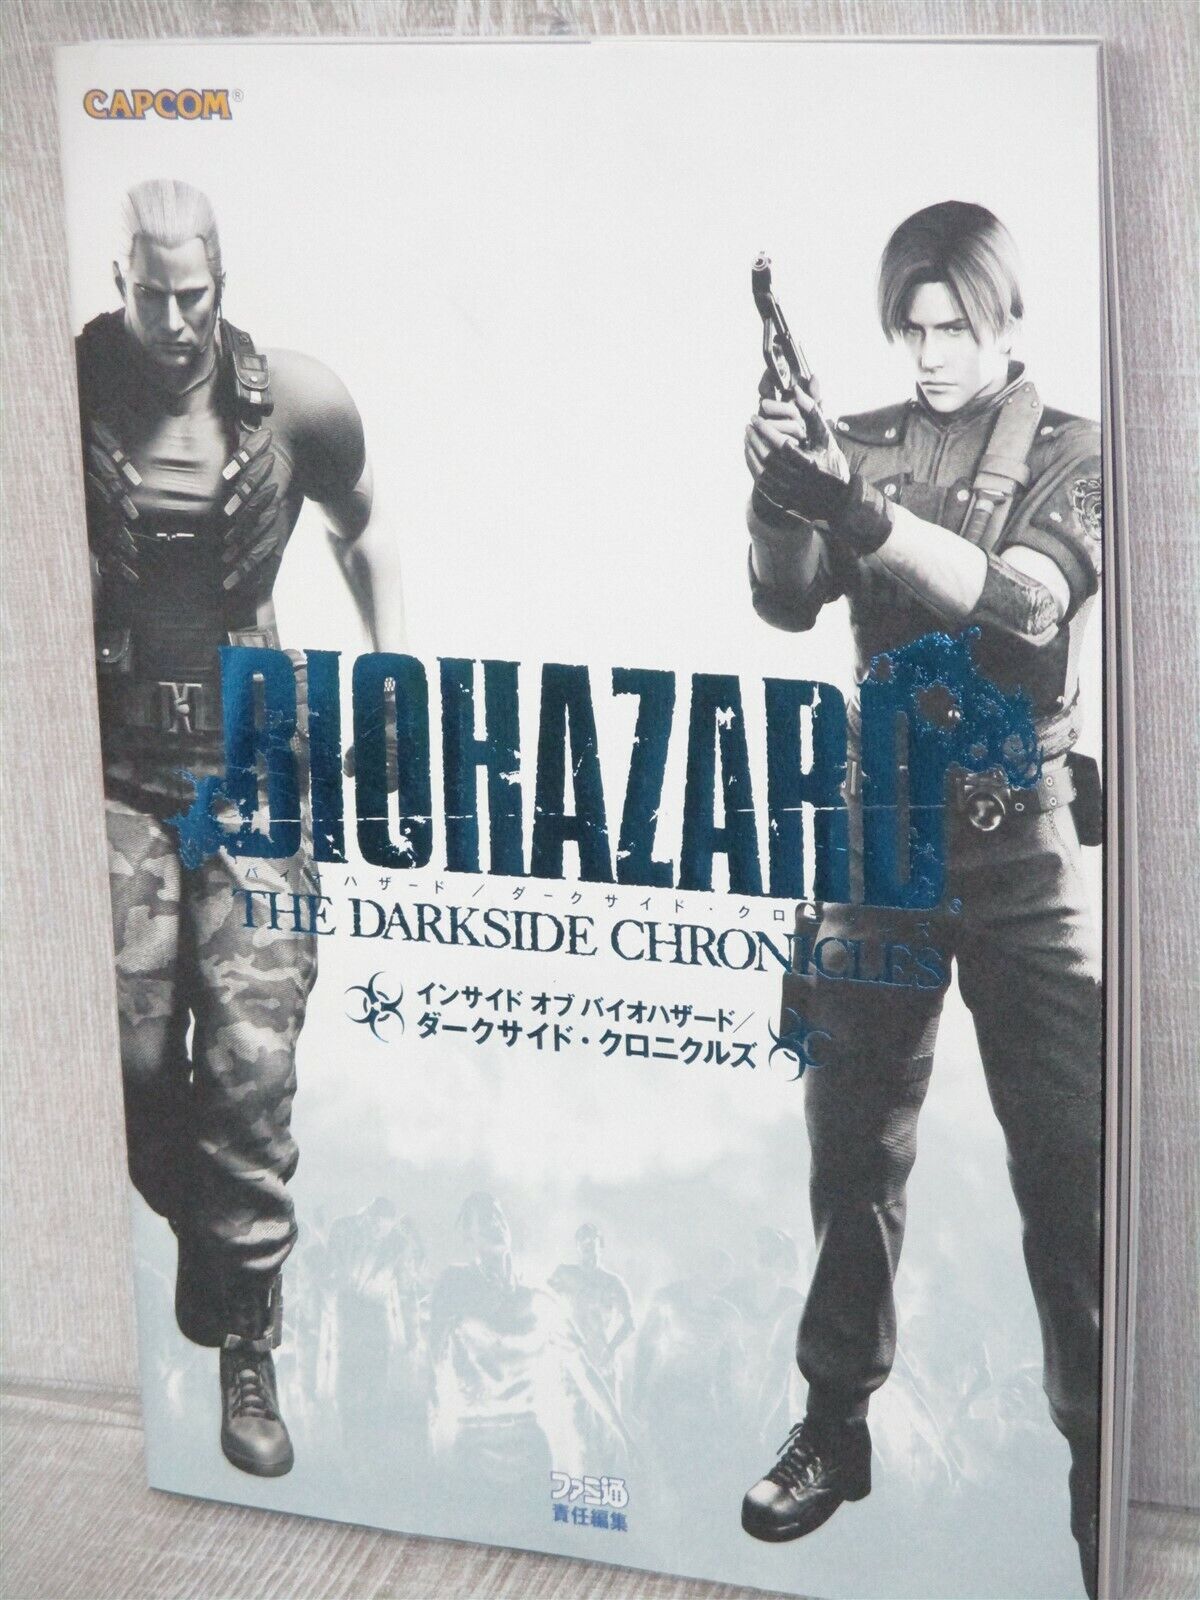 BIOHAZARD DARKSIDE CHRONICLES Resident Evil Art Works Fan Wii Book 2010 EB